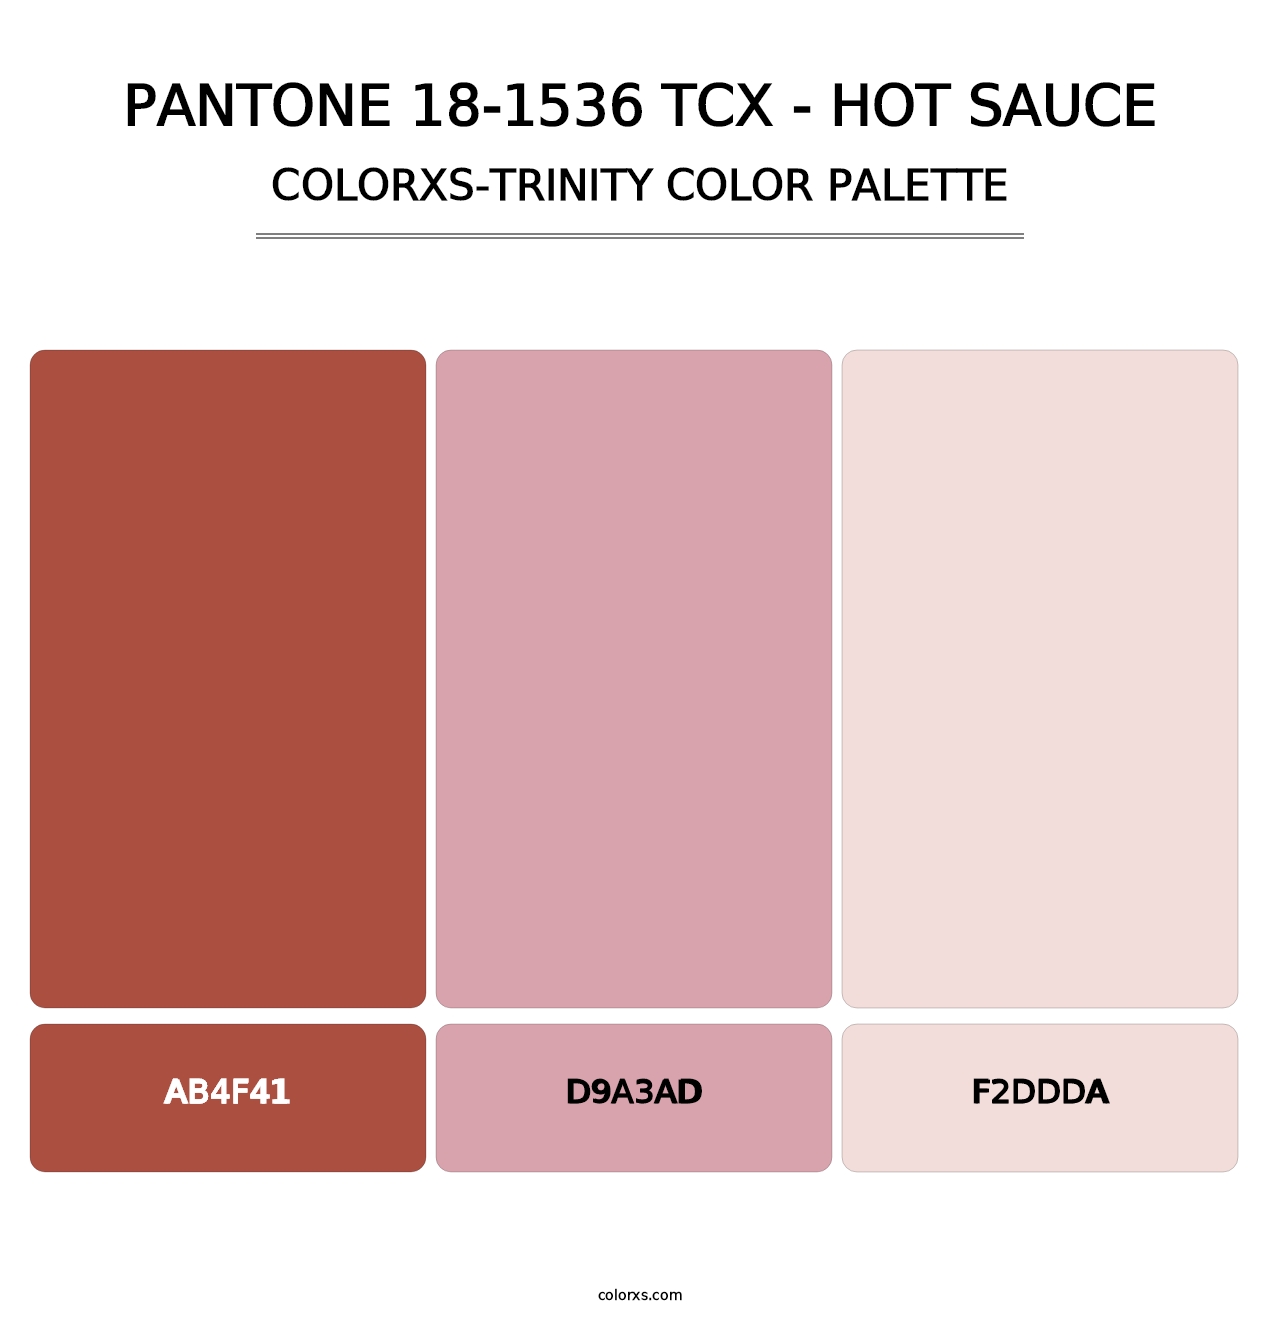 PANTONE 18-1536 TCX - Hot Sauce - Colorxs Trinity Palette